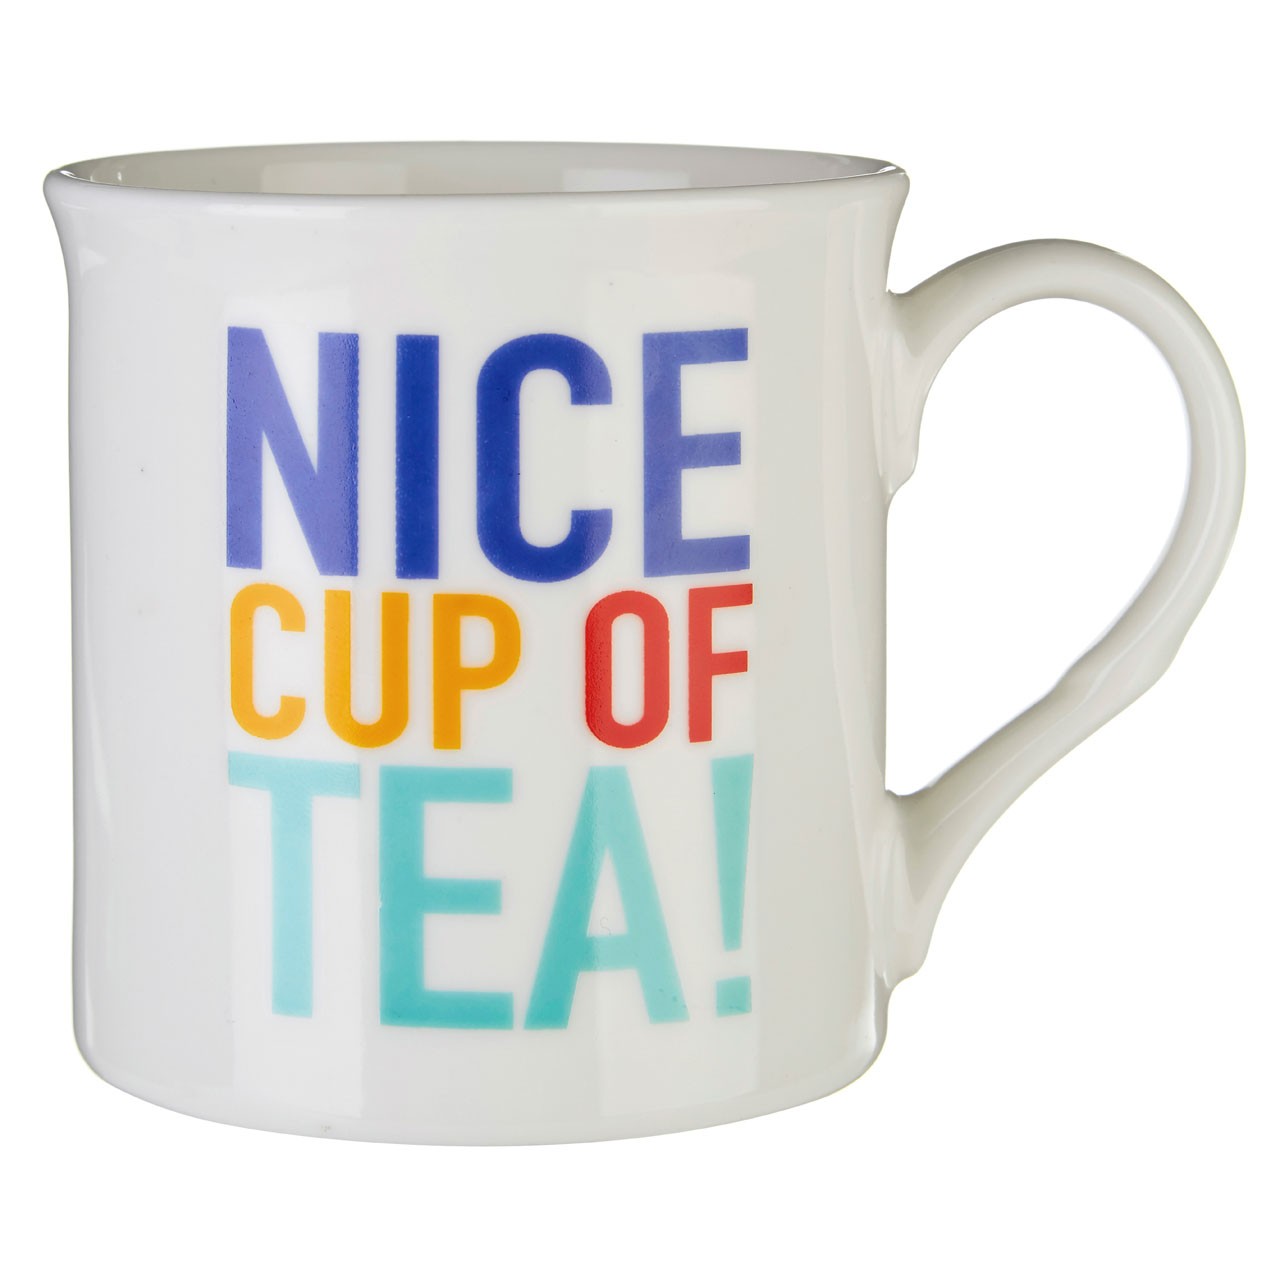 Prime Furnishing "Nice Cup of Tea" Mugs - Set Of 4